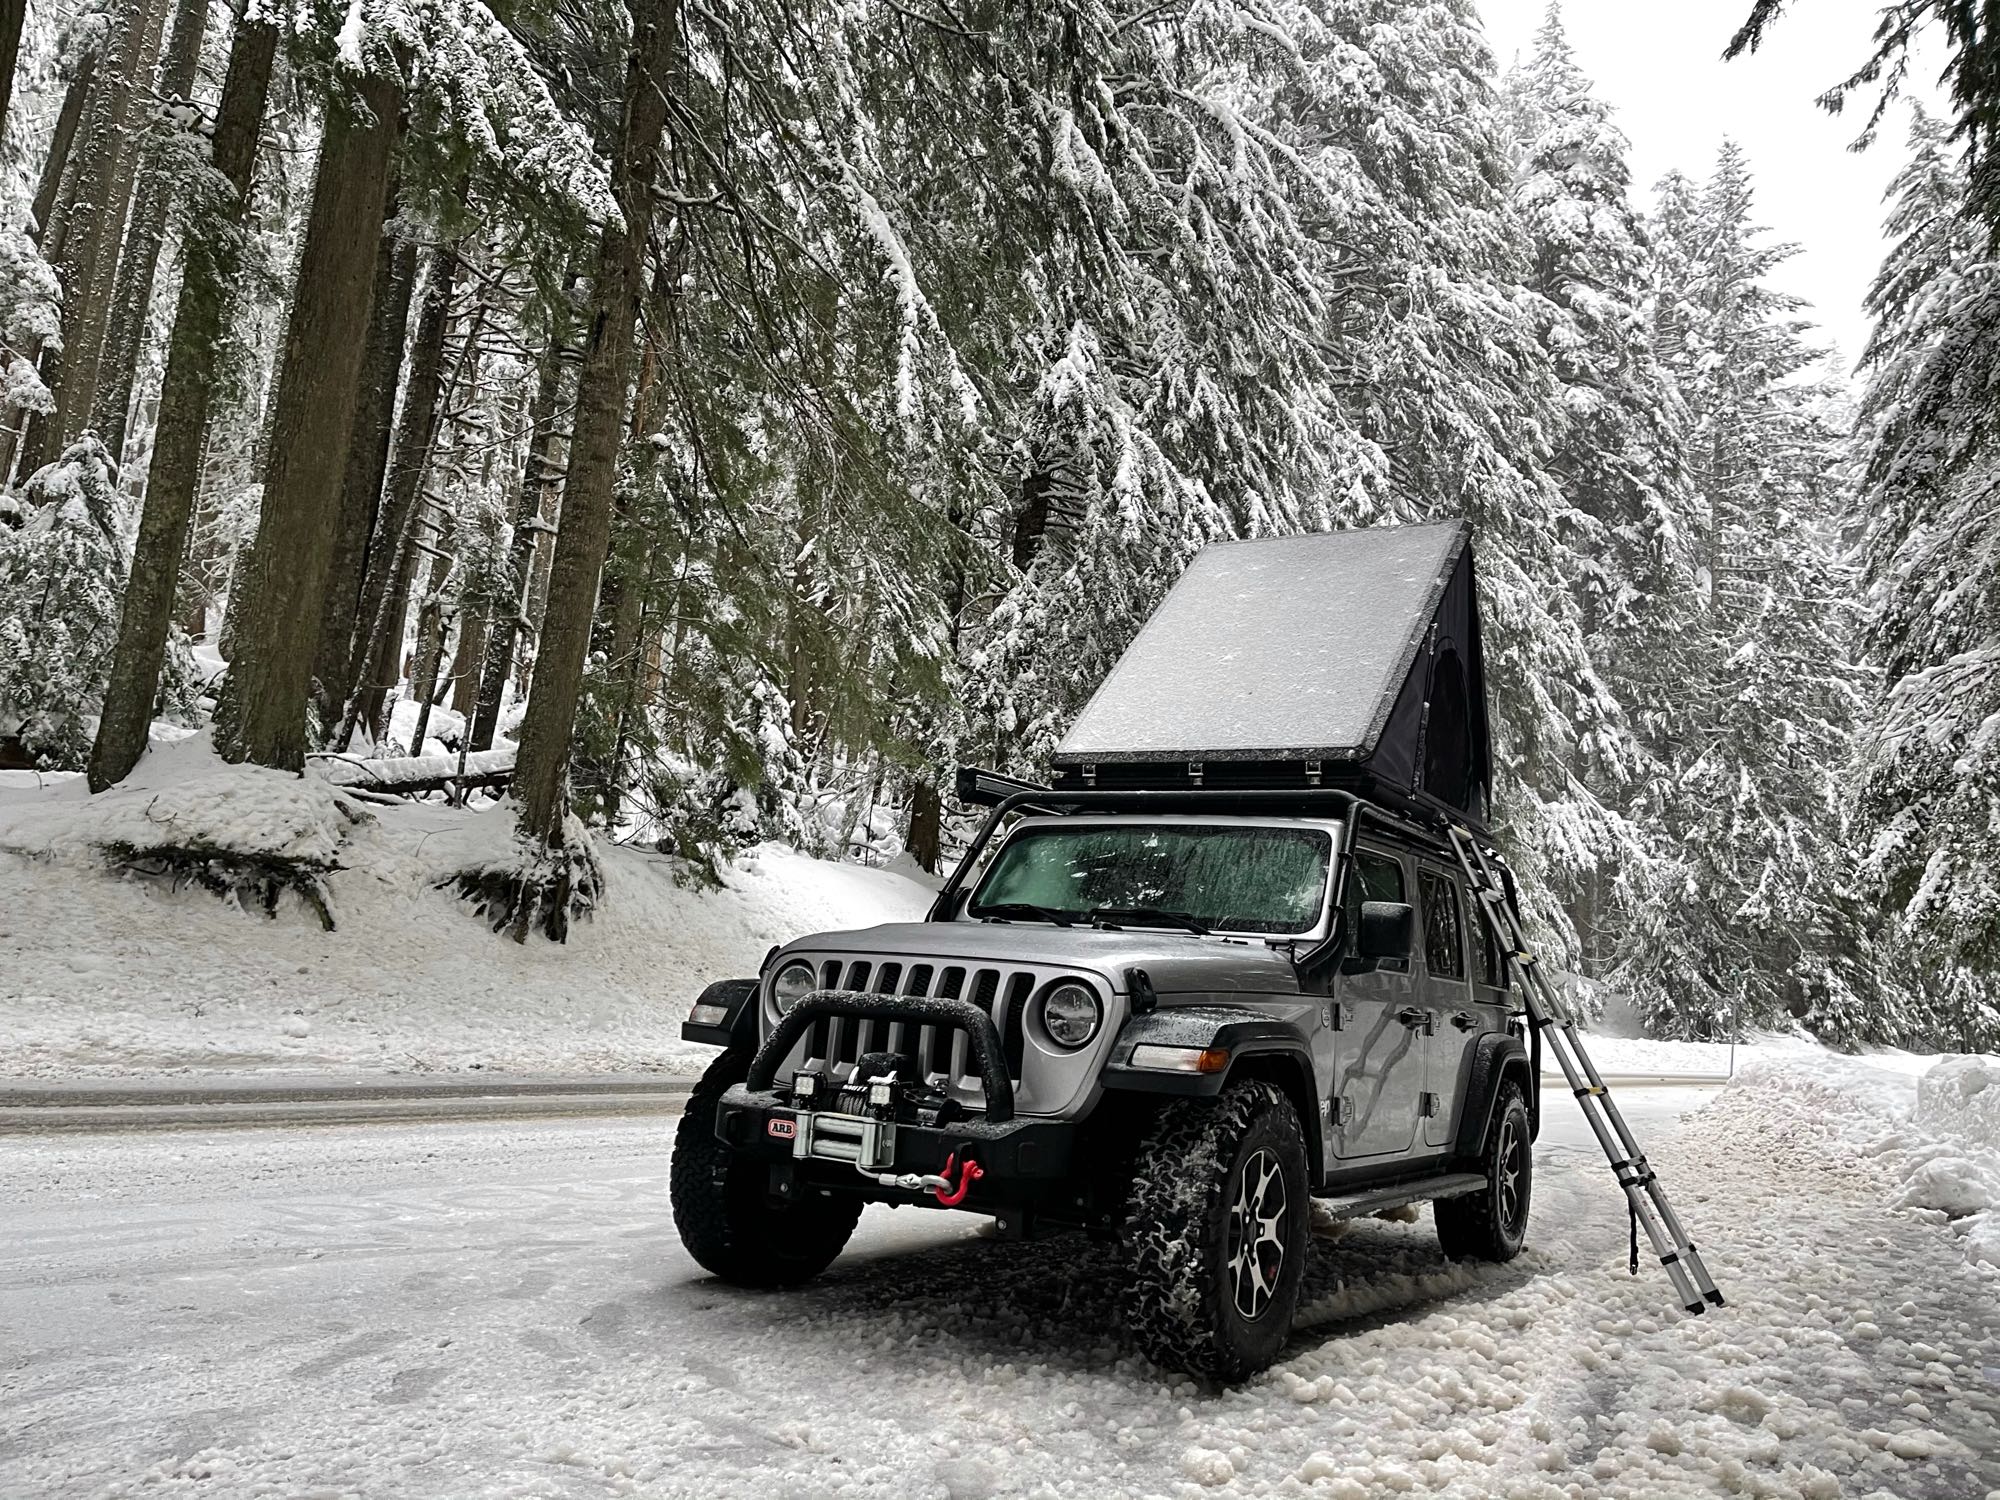 2018 Jeep Wrangler Unlimited Camper van Rental in SeaTac, WA | Outdoorsy